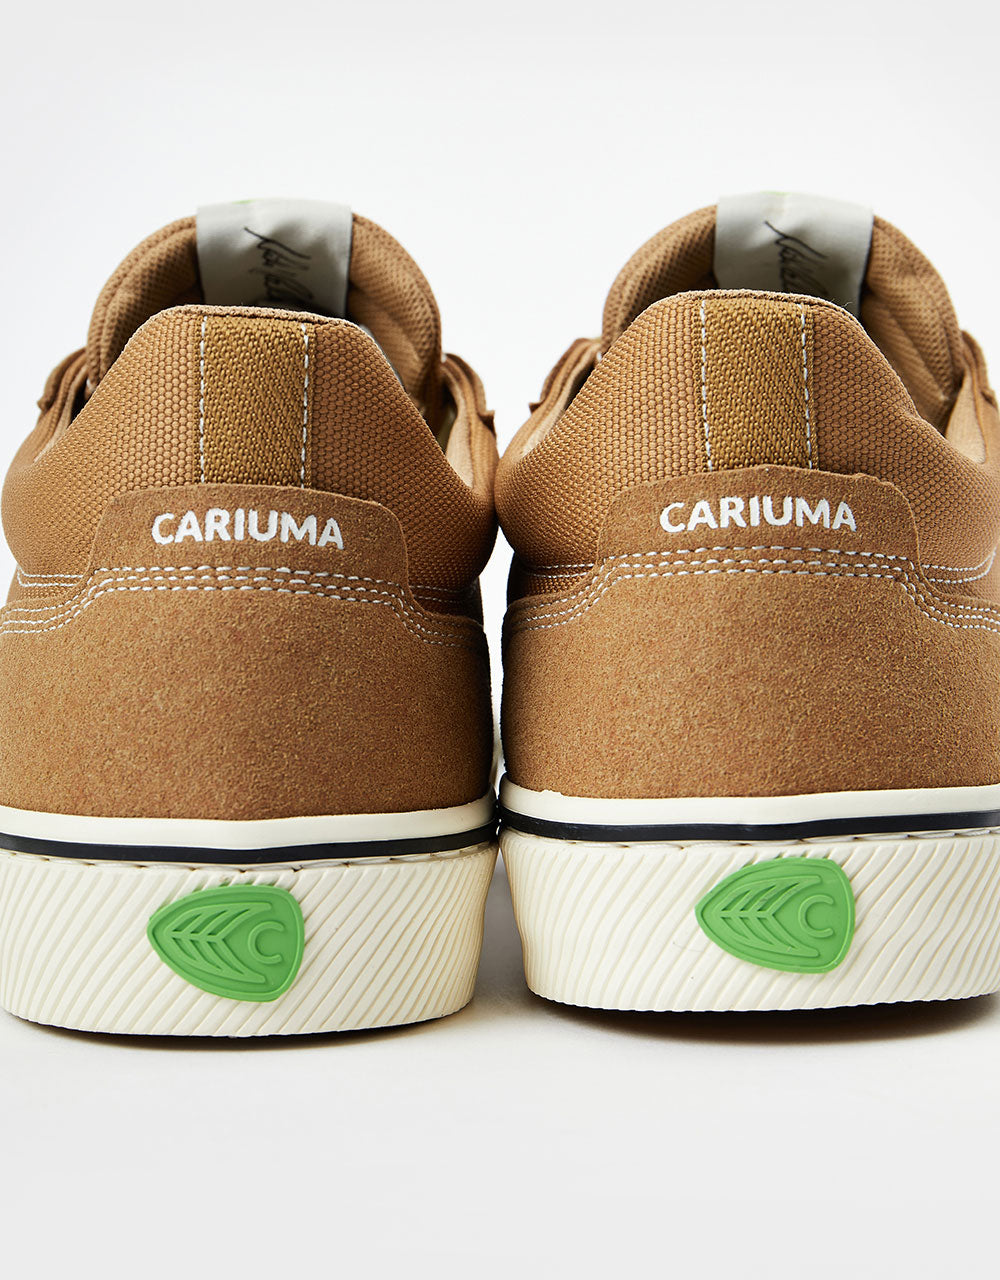 Cariuma The Vallely  Skate Shoes - Camel Suede